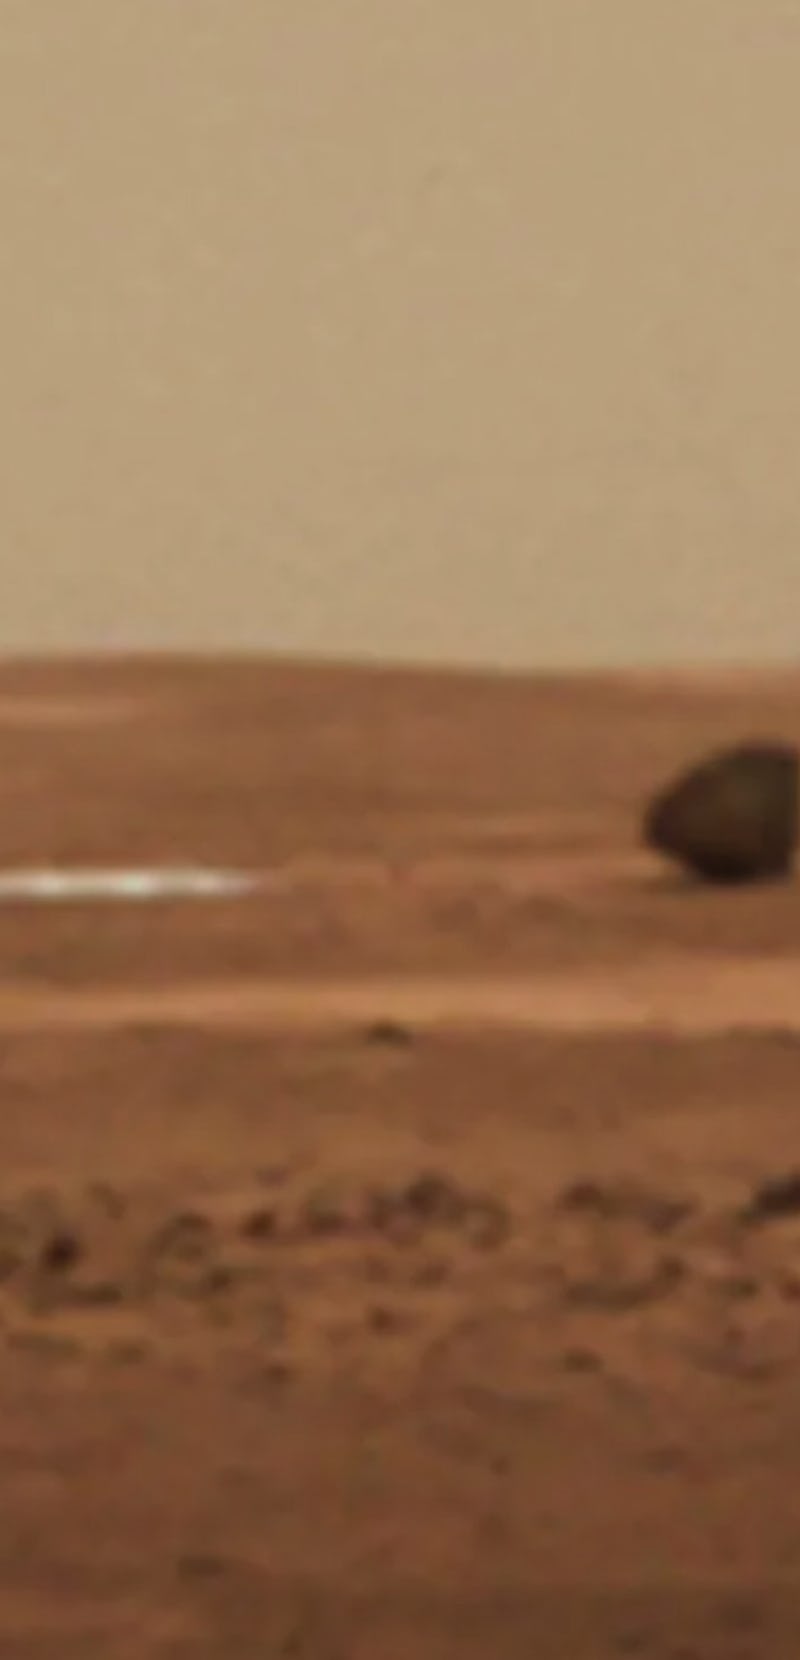 zhurong landing shell and parachute on Mars